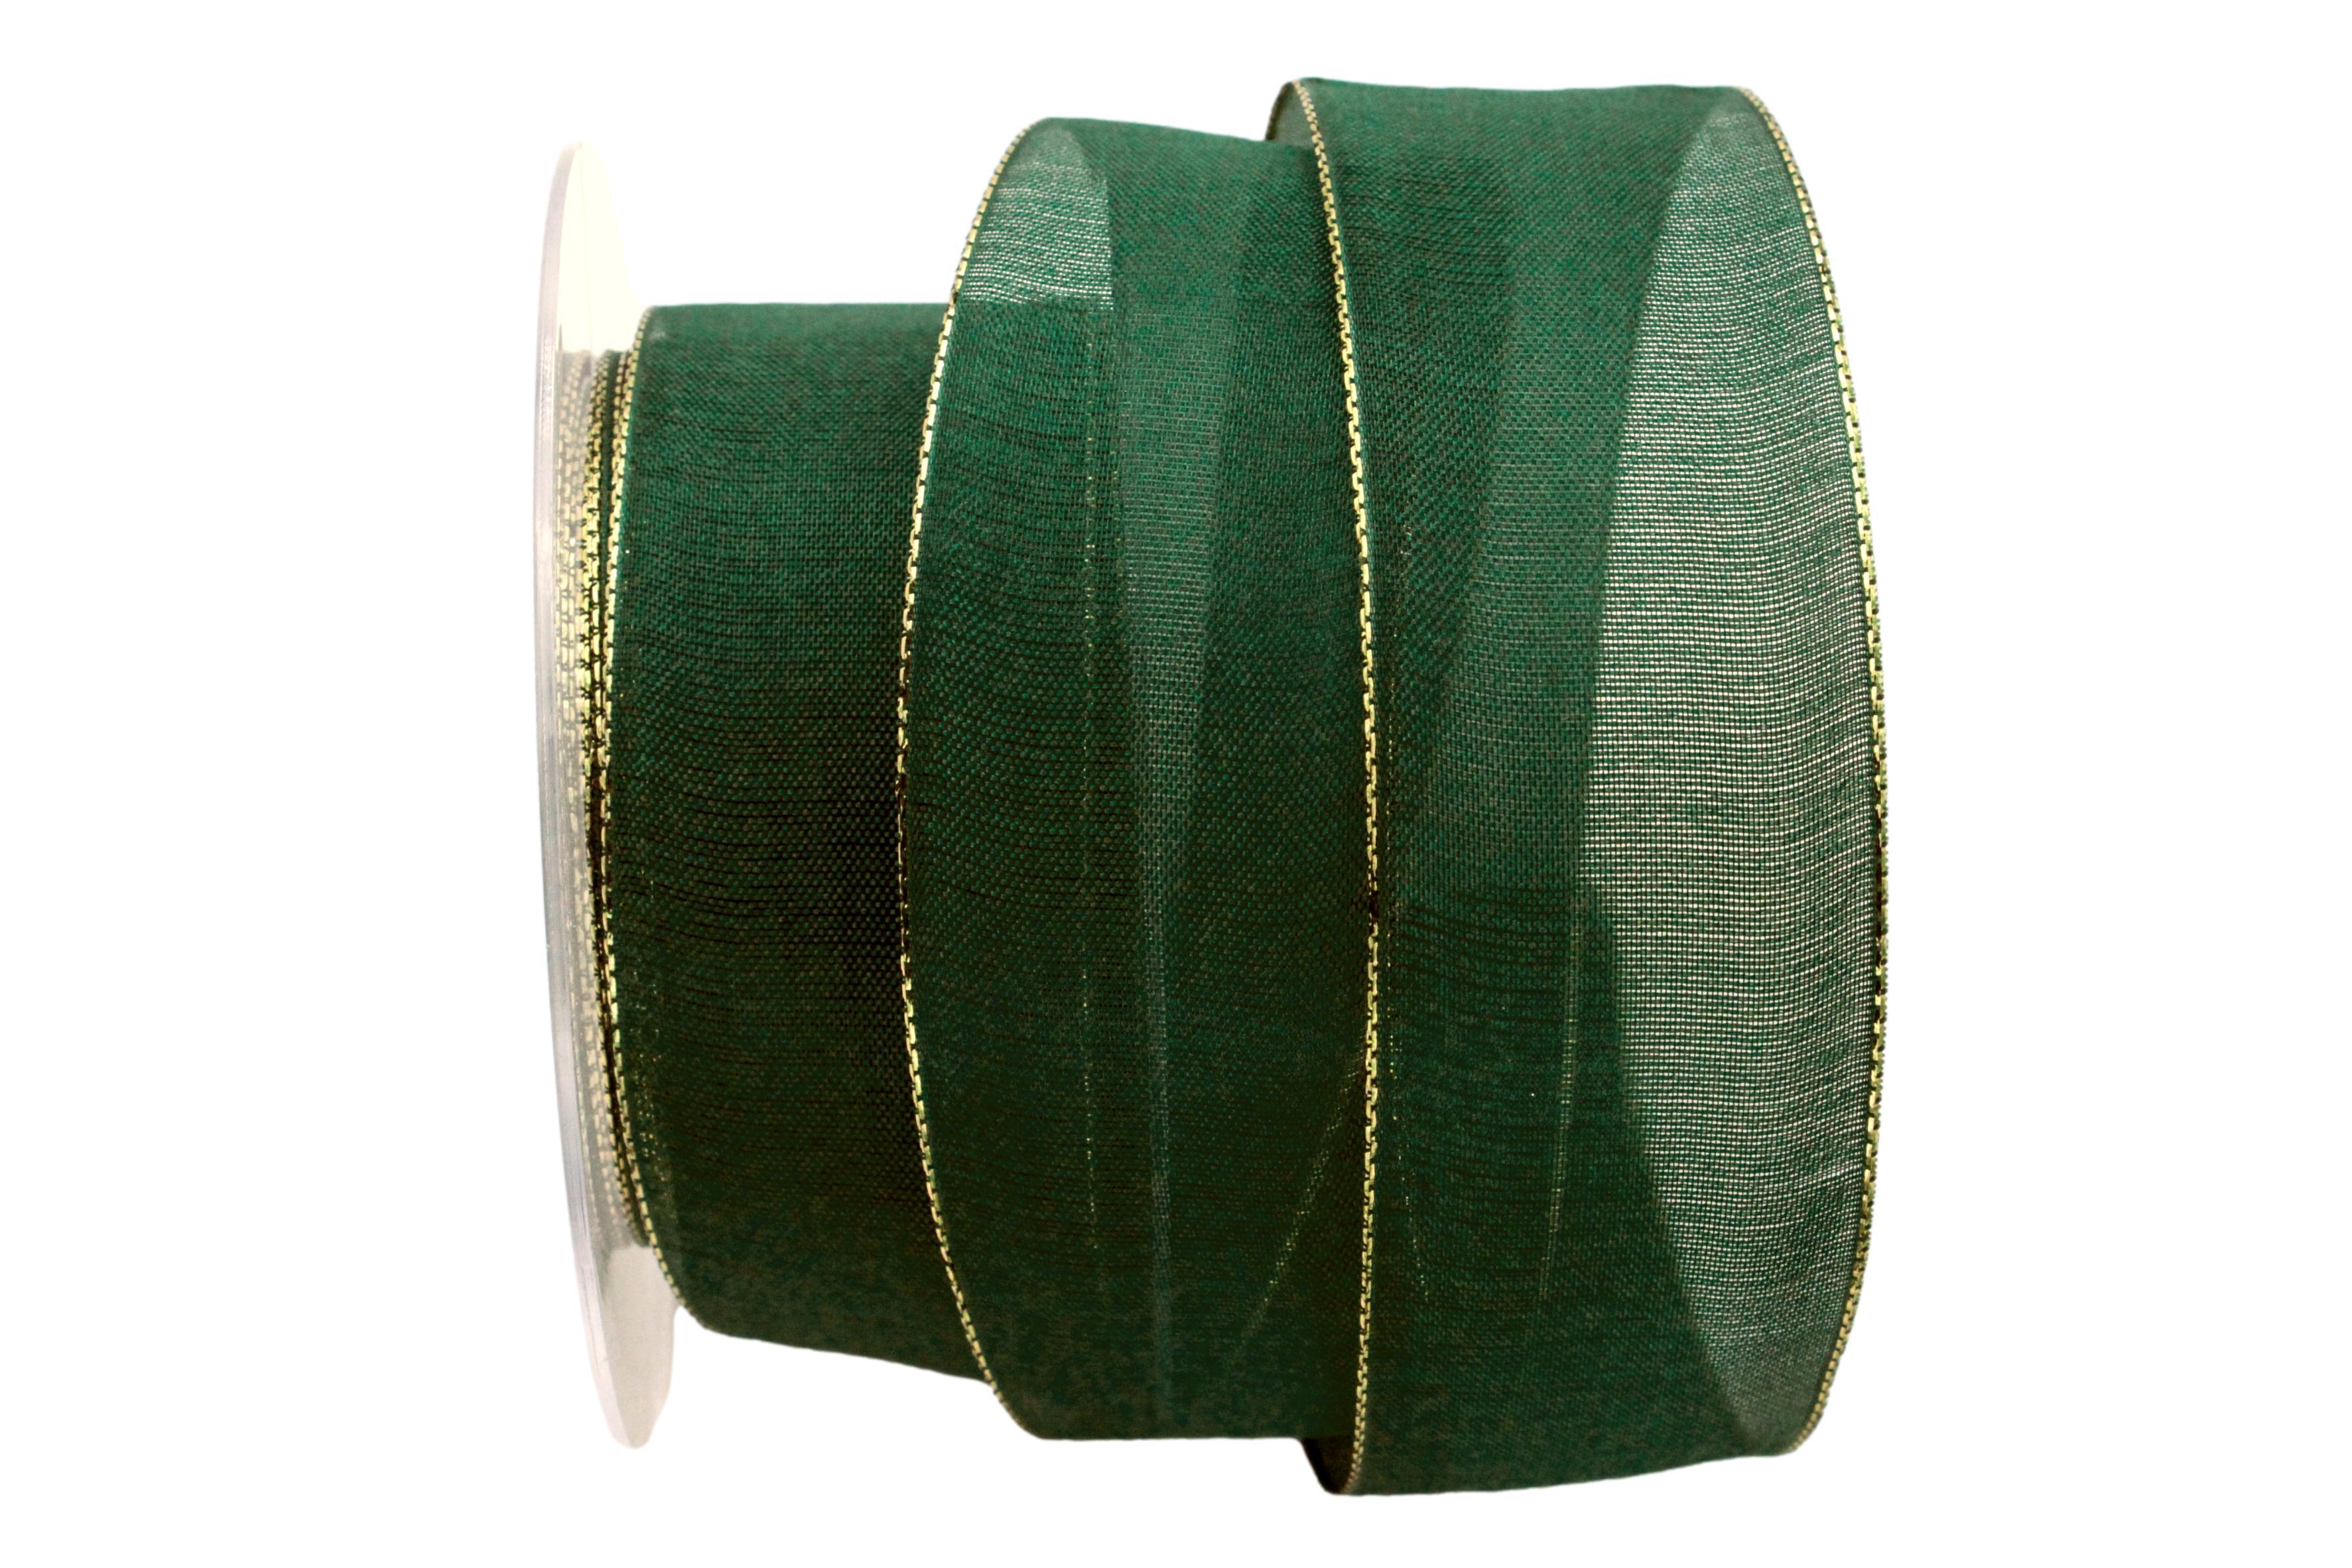 Organzaband Goldkante grün 40mm mit Draht